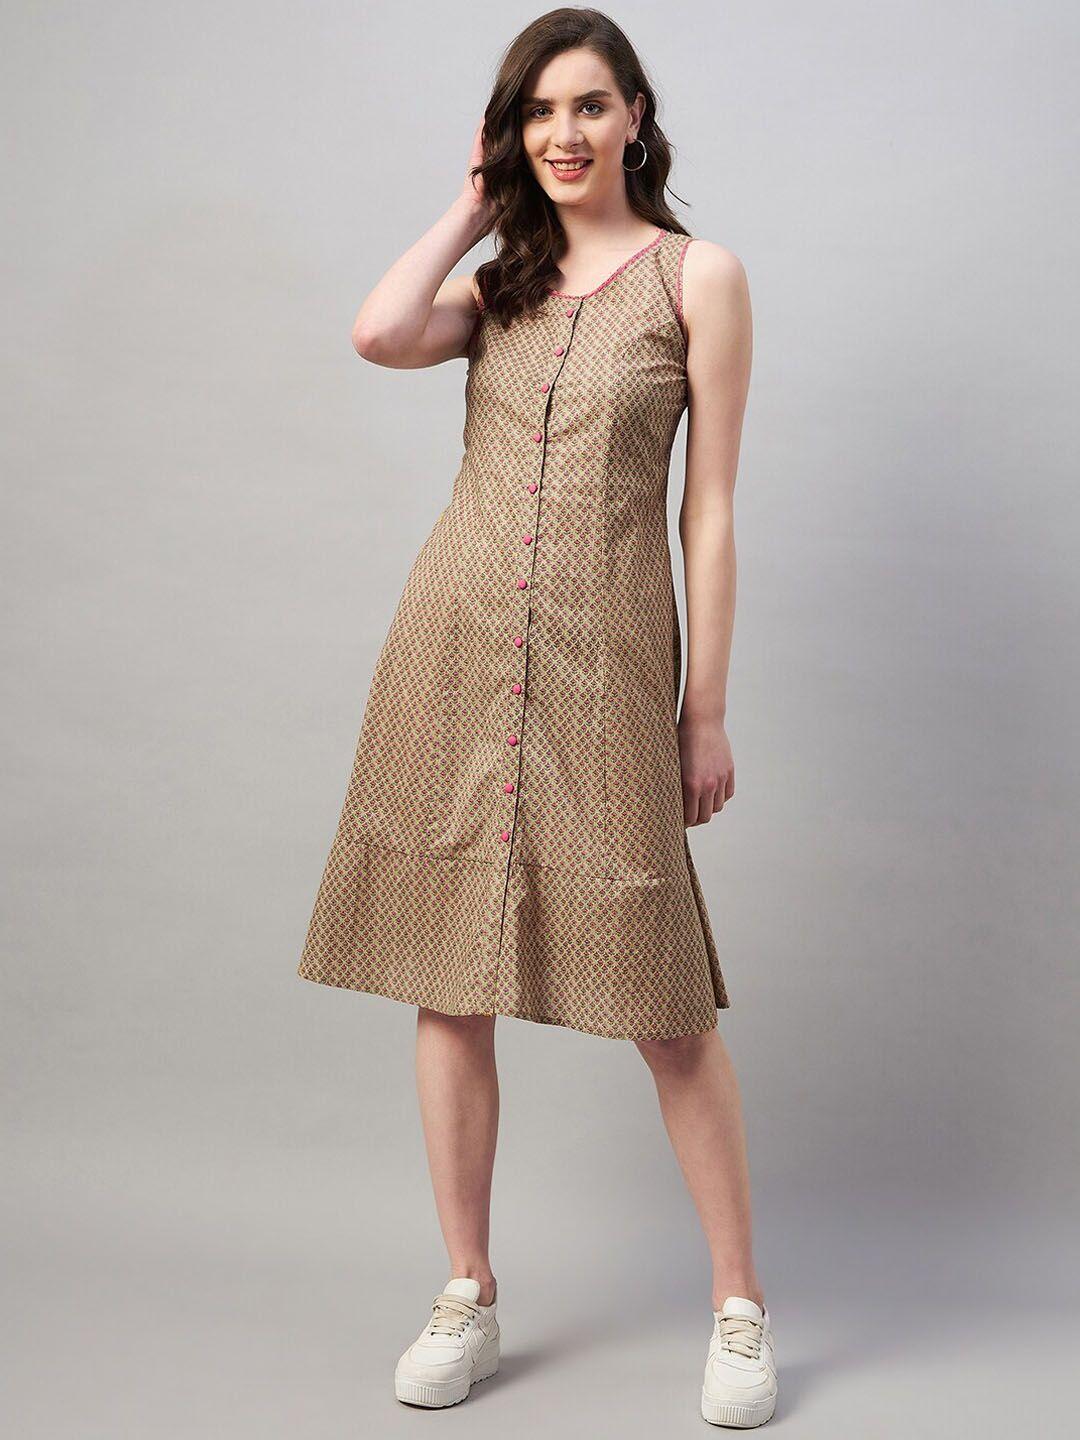 azira ethnic motifs printed pure cotton sleeveless a-line dress